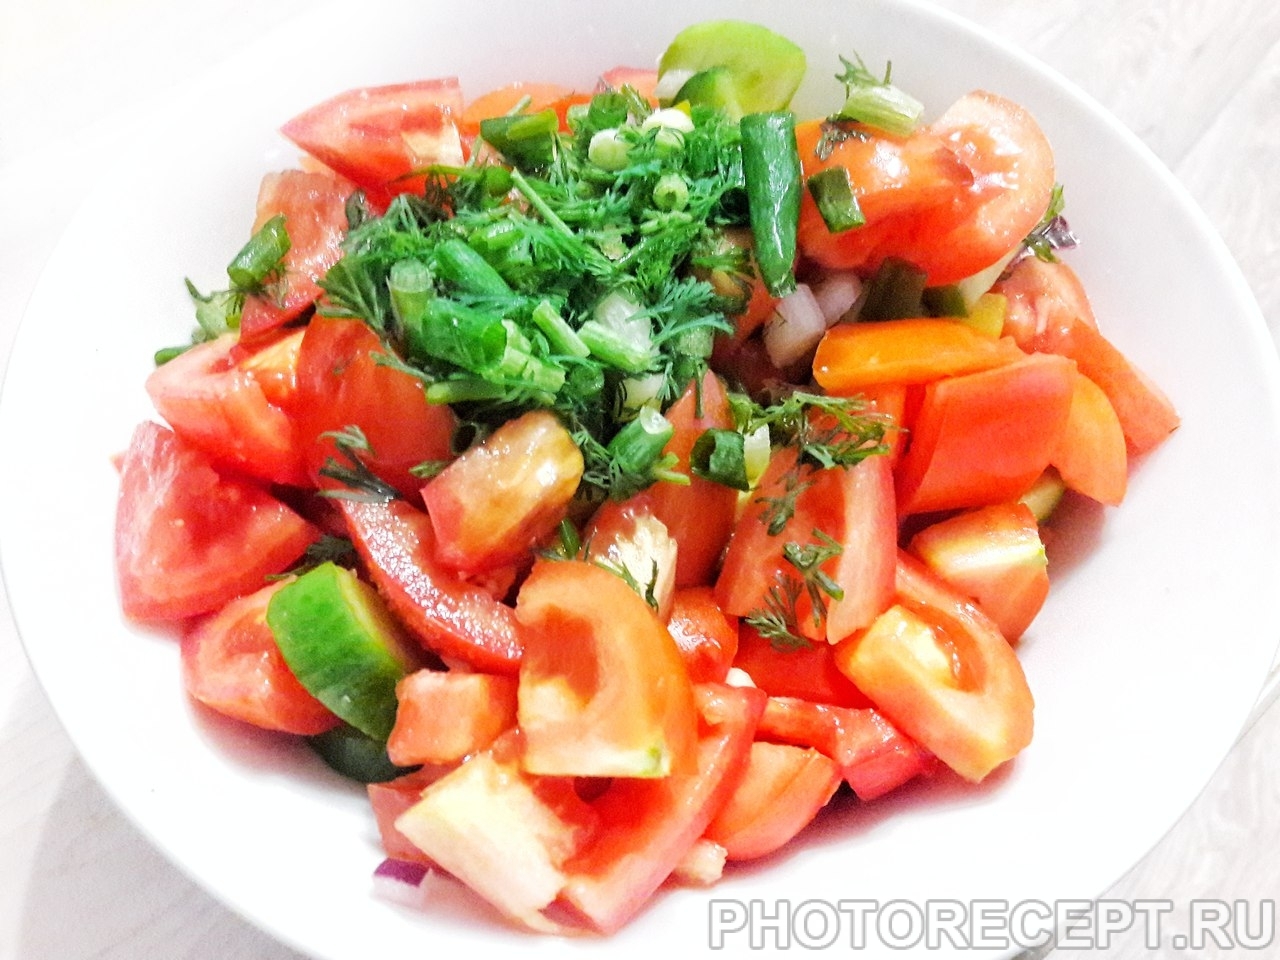 Салат из овощей помидоры огурцы перец